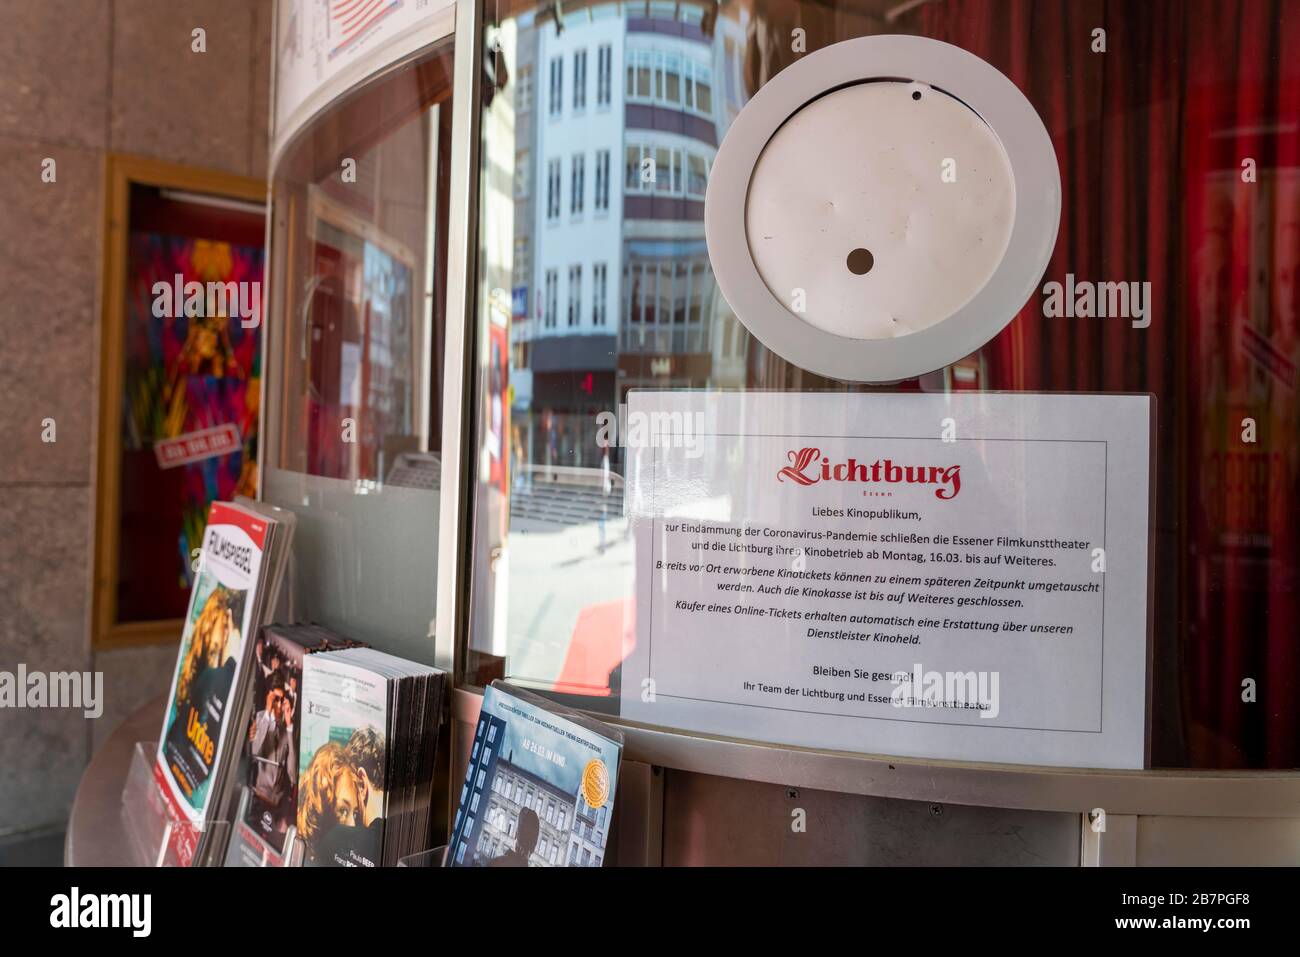 Effects of the Coronavirus Pandemic in Germany, Essen, closed cinema, Lichtburg, Stock Photo